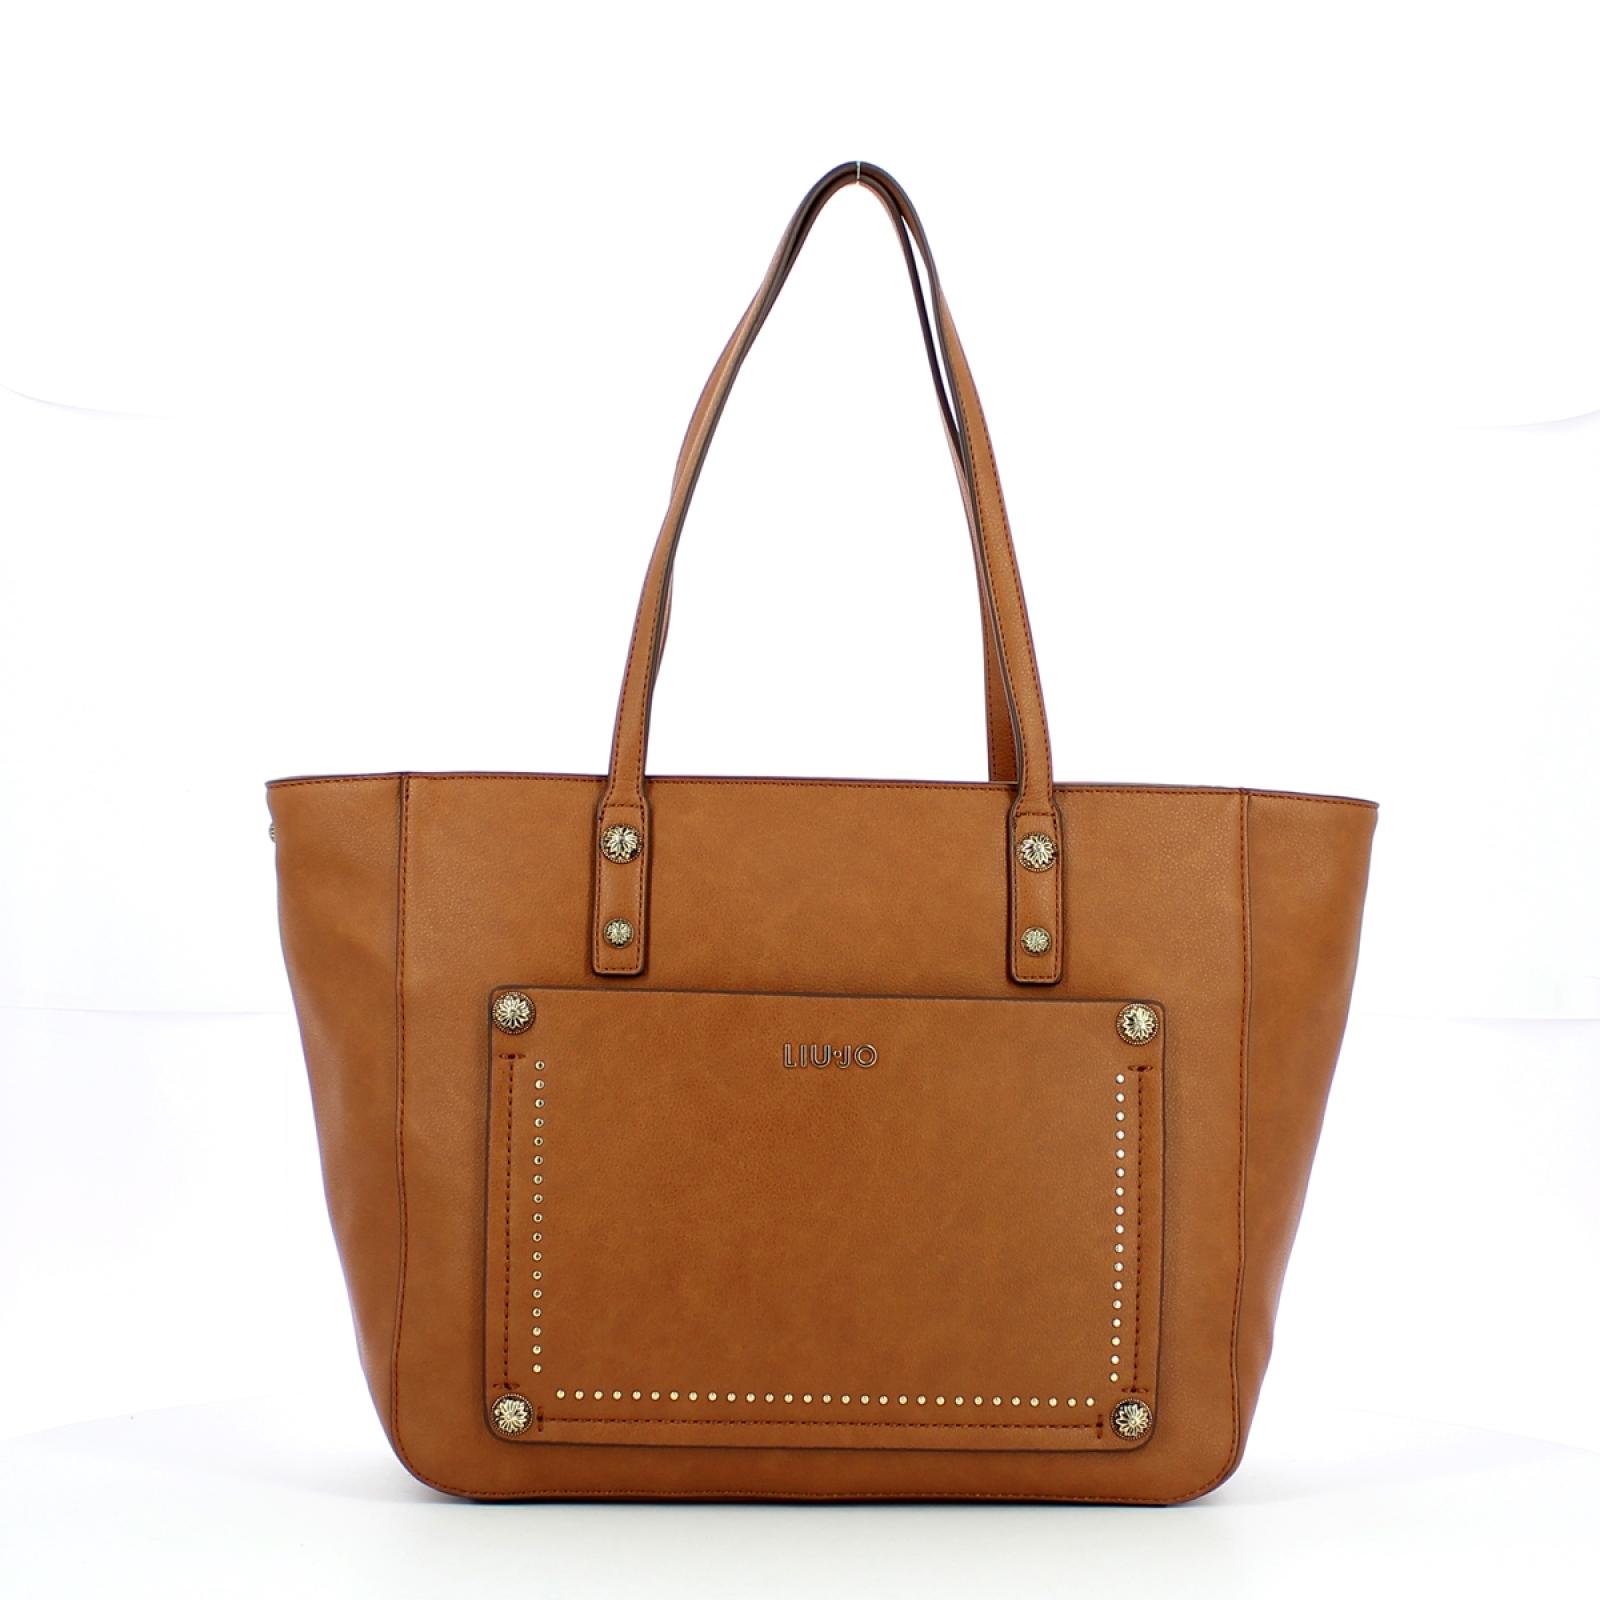 Liu Jo Shopping Bag Aniene - 1